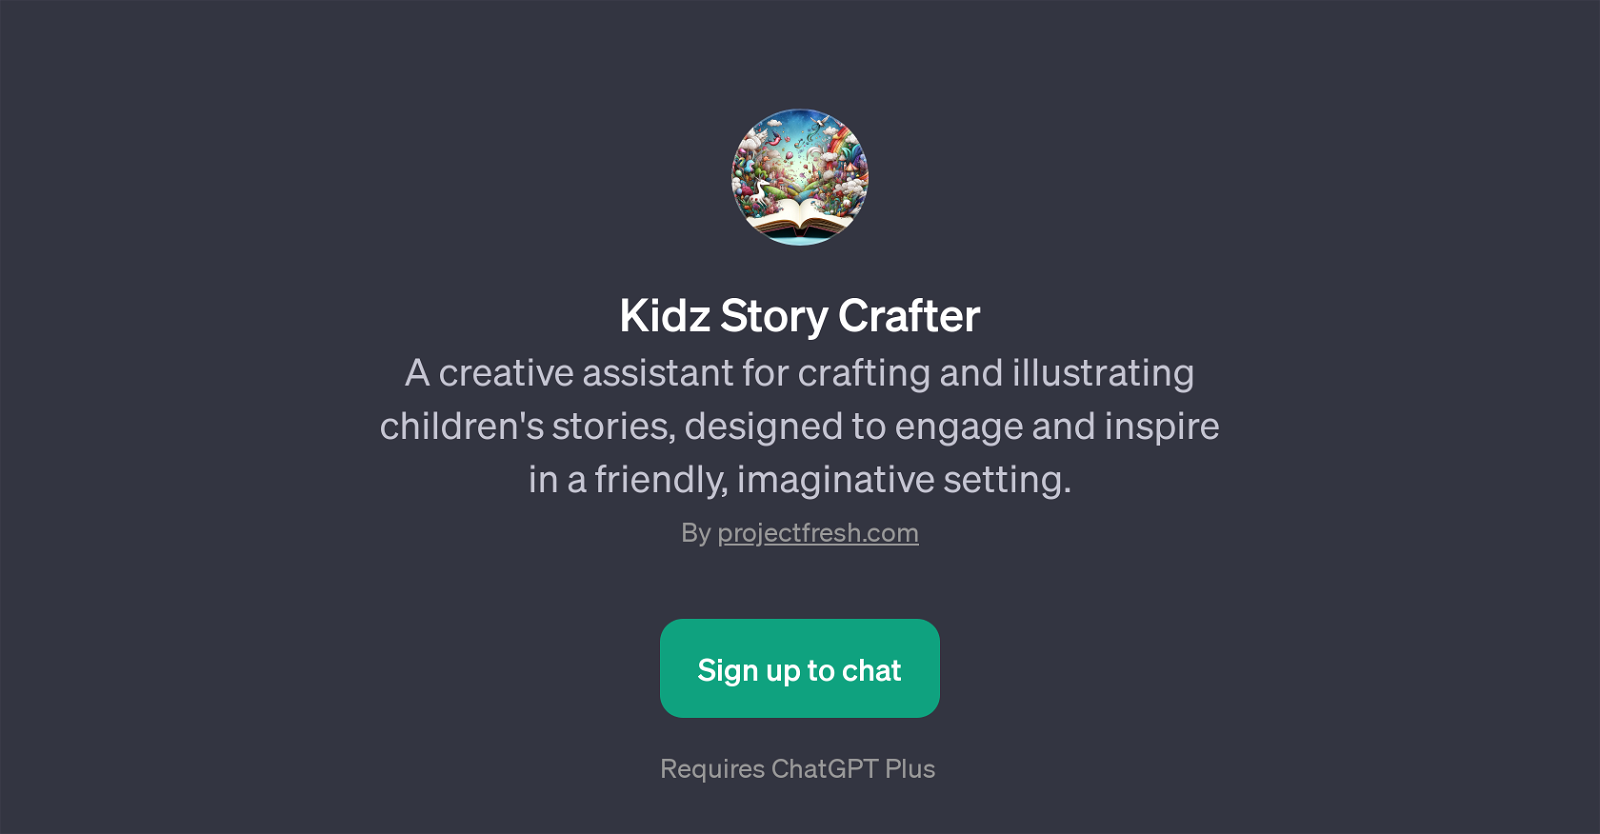 Kidz Story Crafter website